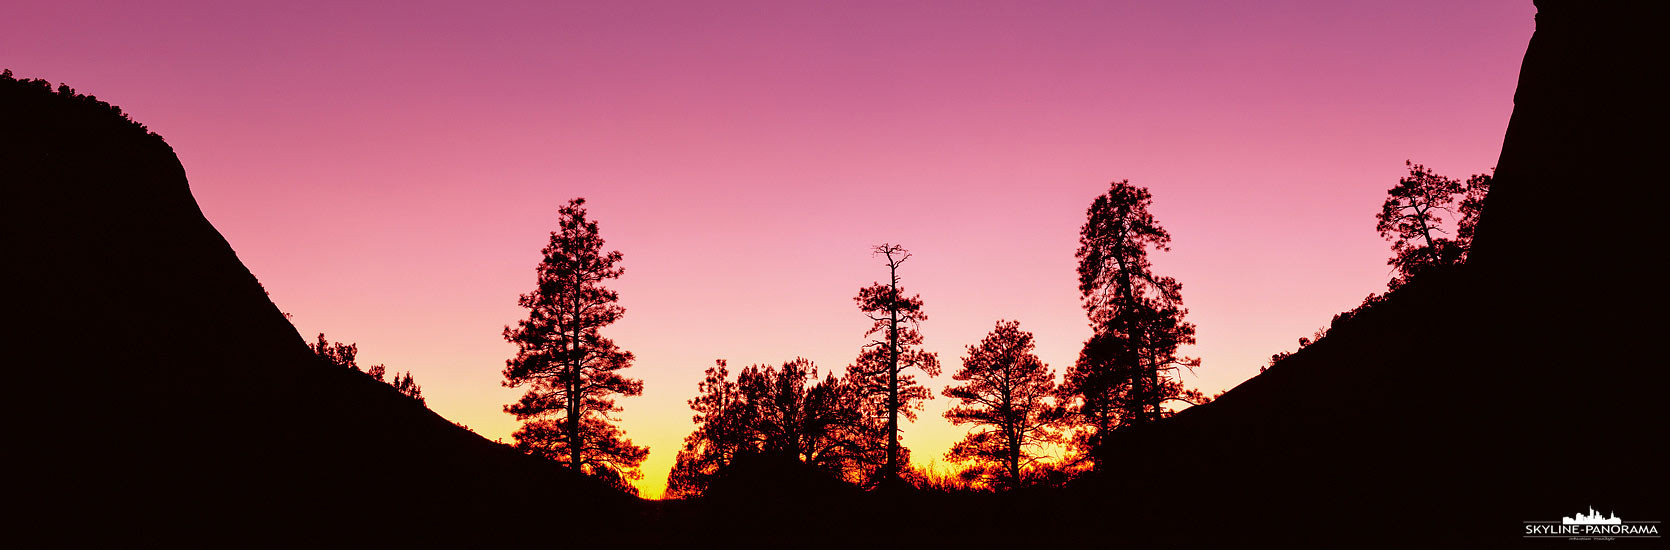 Zion Sunset Silhouette (p_01120)